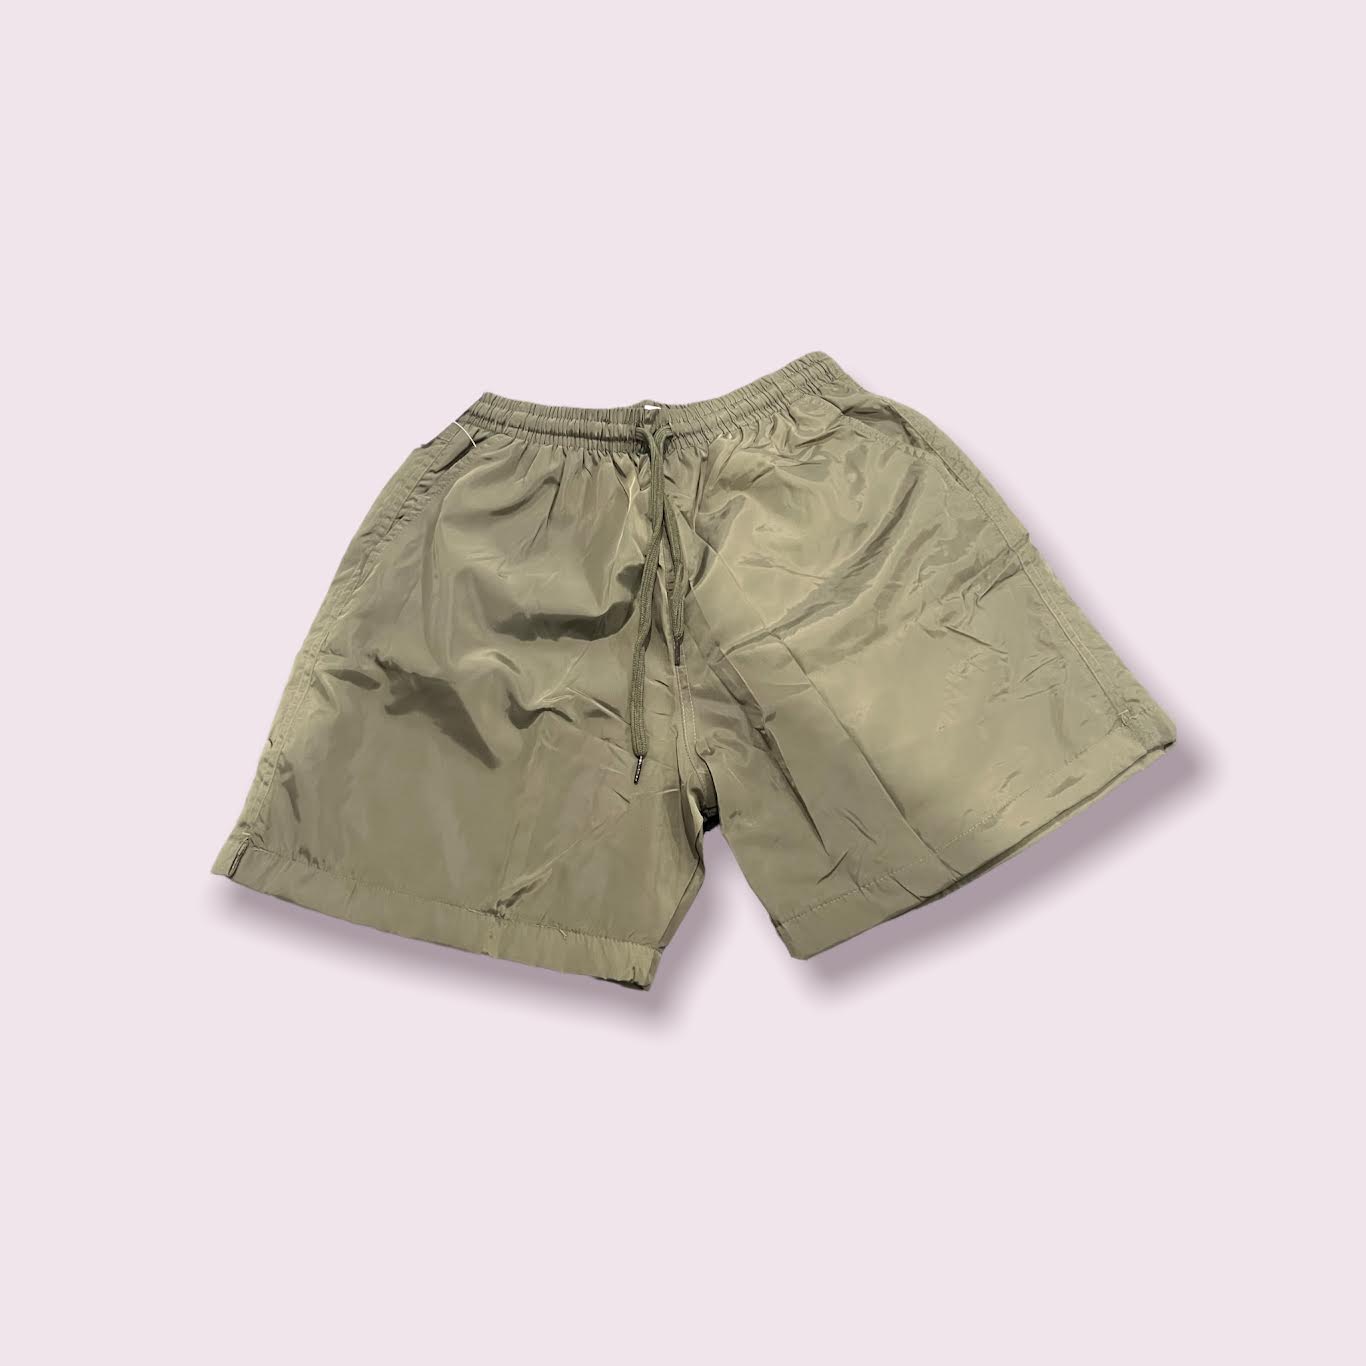 Olive windbreaker shorts